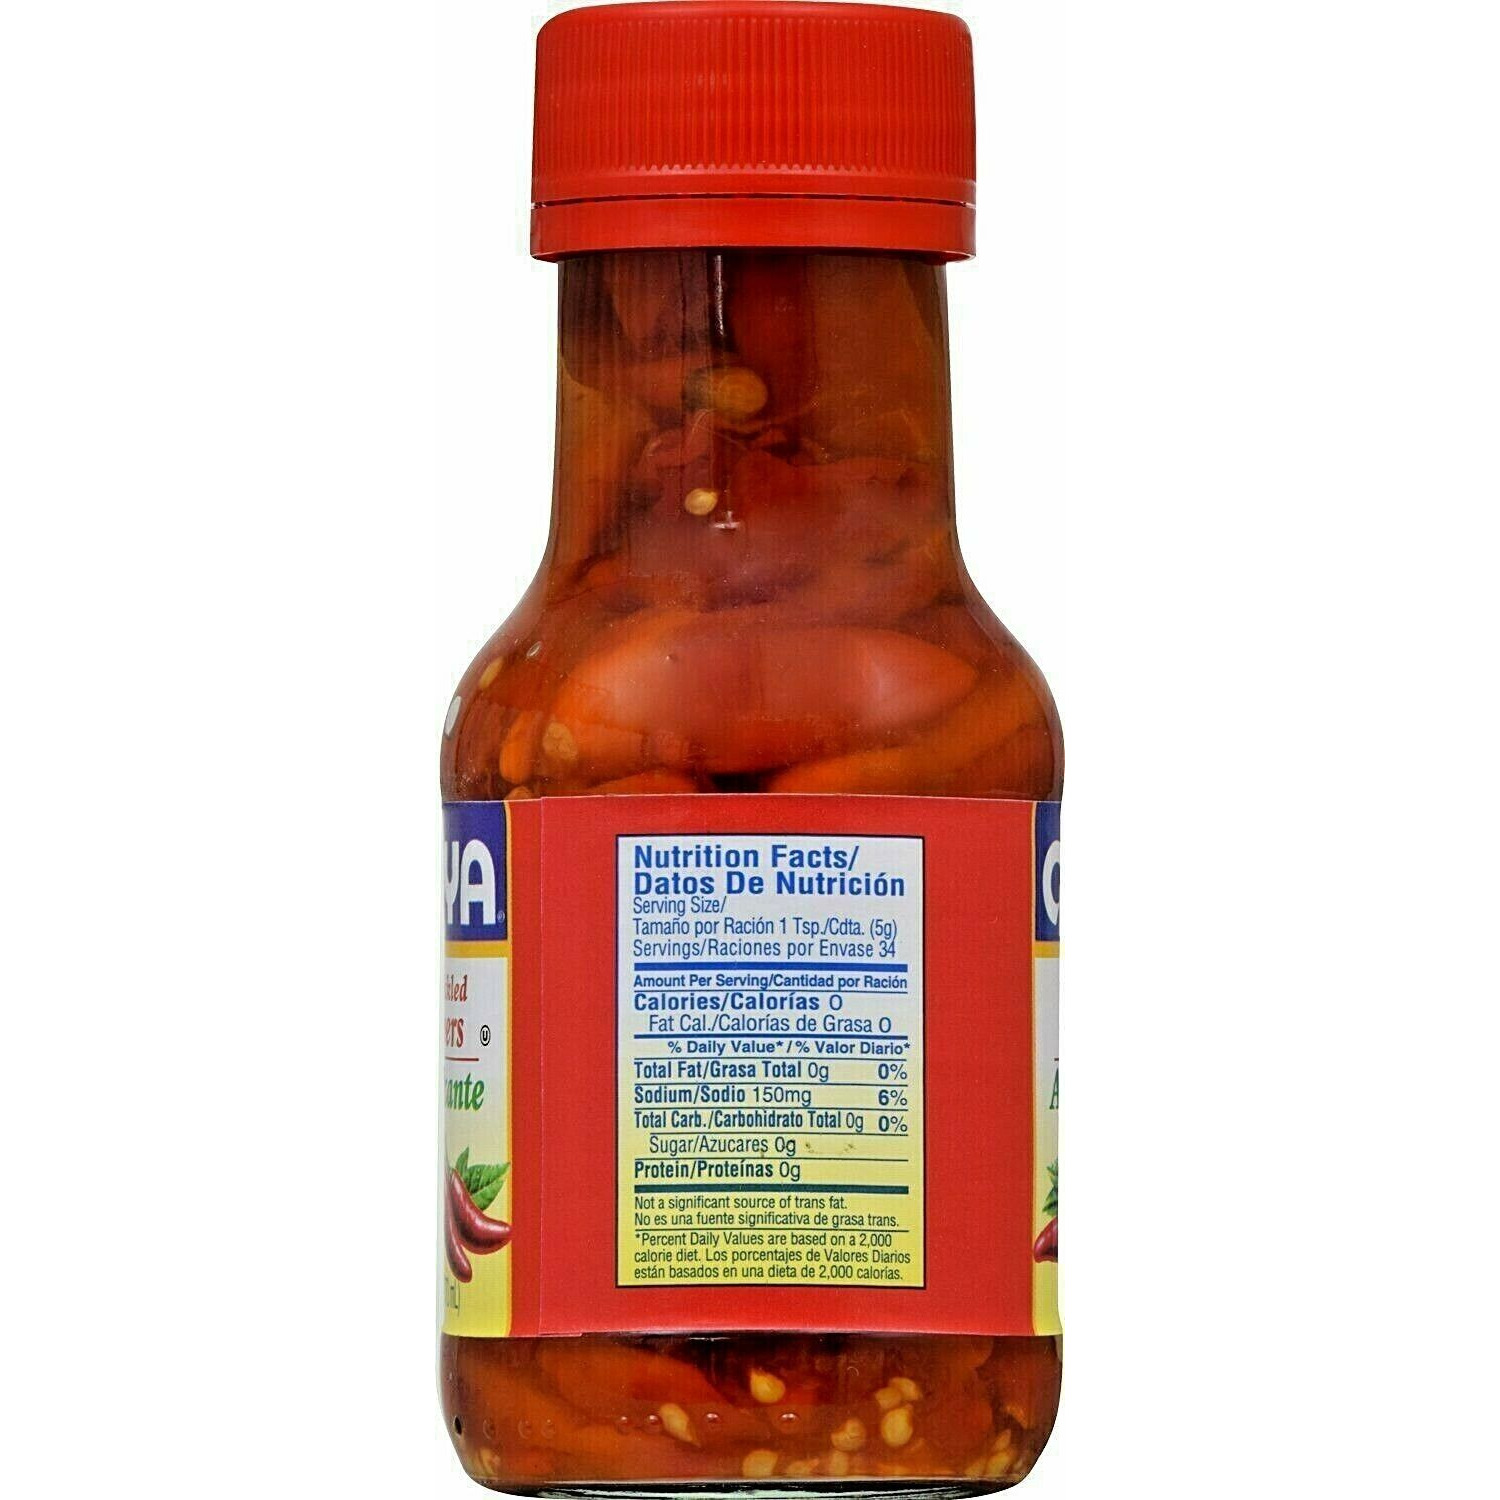 Goya Hot Pickled Peppers - 6 Fl Oz (178 Ml)